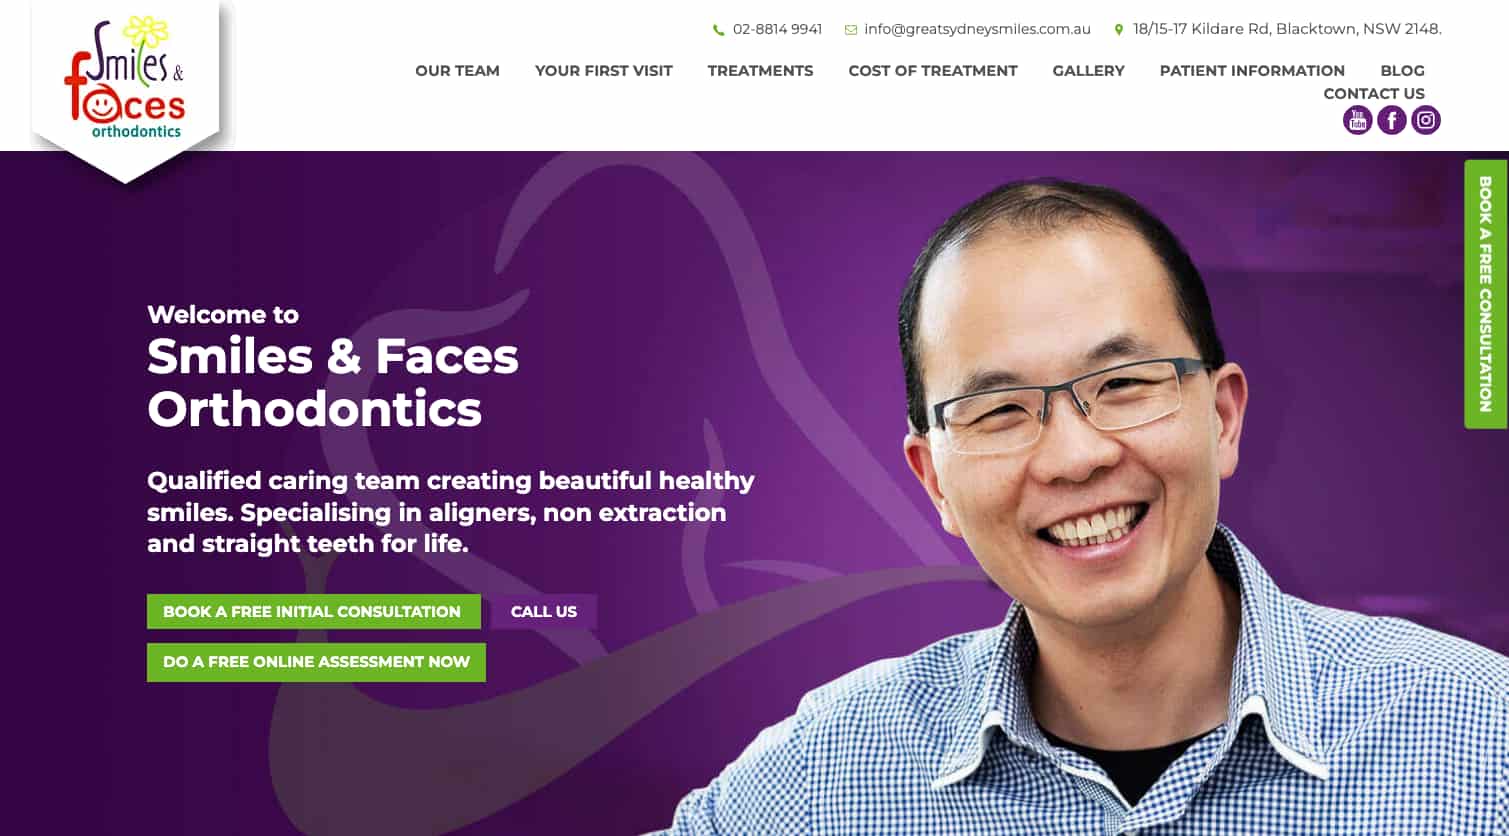 Smiles & Faces Orthodontics